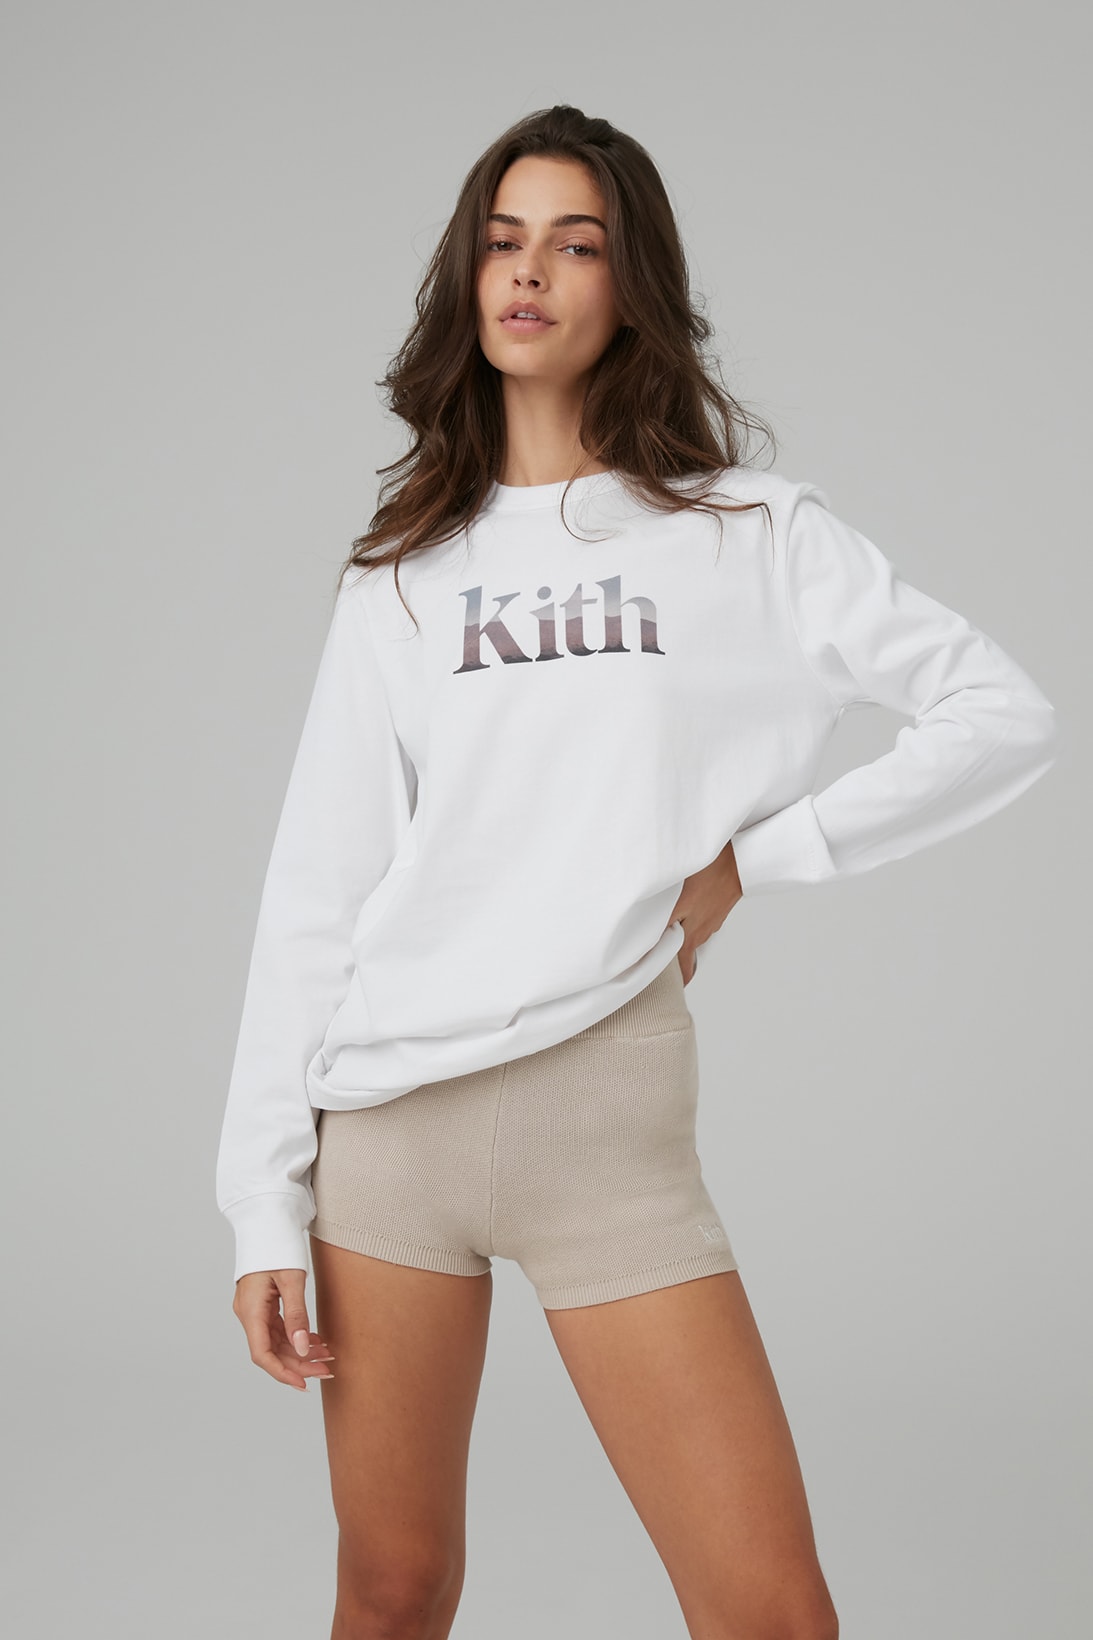 kith women spring collection drop 2 lookbook loungewear